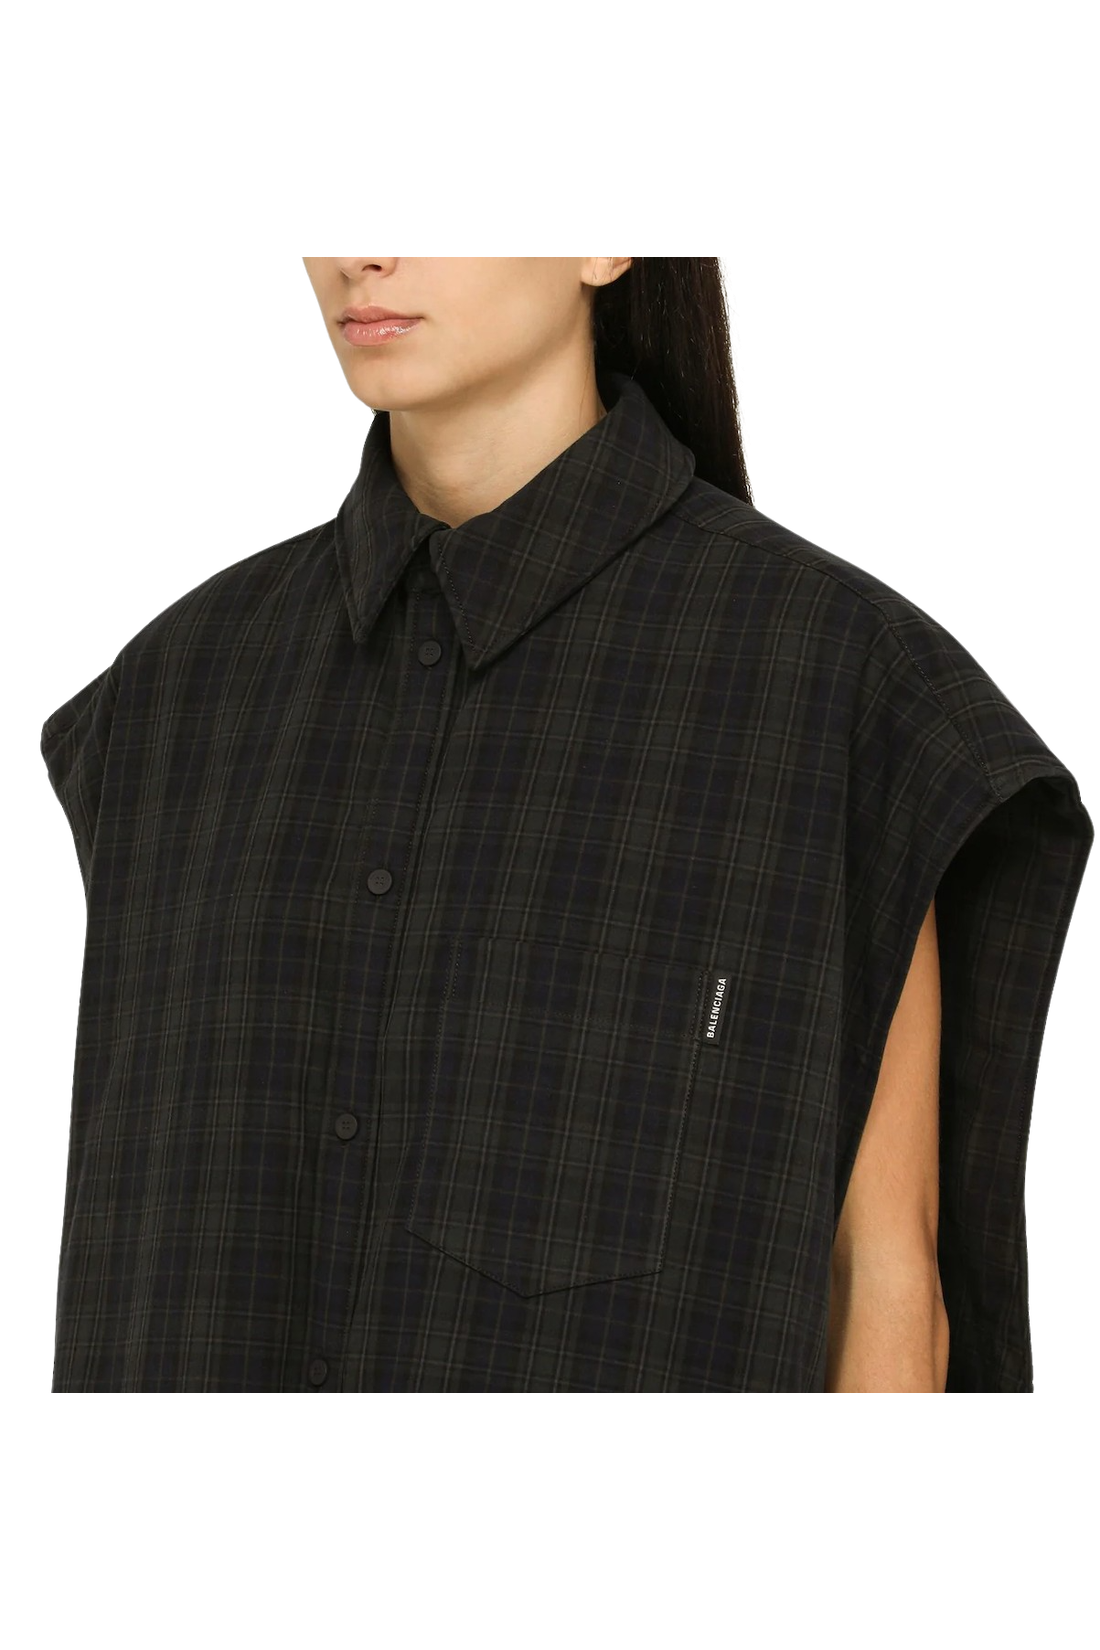 Balenciaga-OUTLET-SALE-Conscious Hemd mit Karomuster-ARCHIVIST